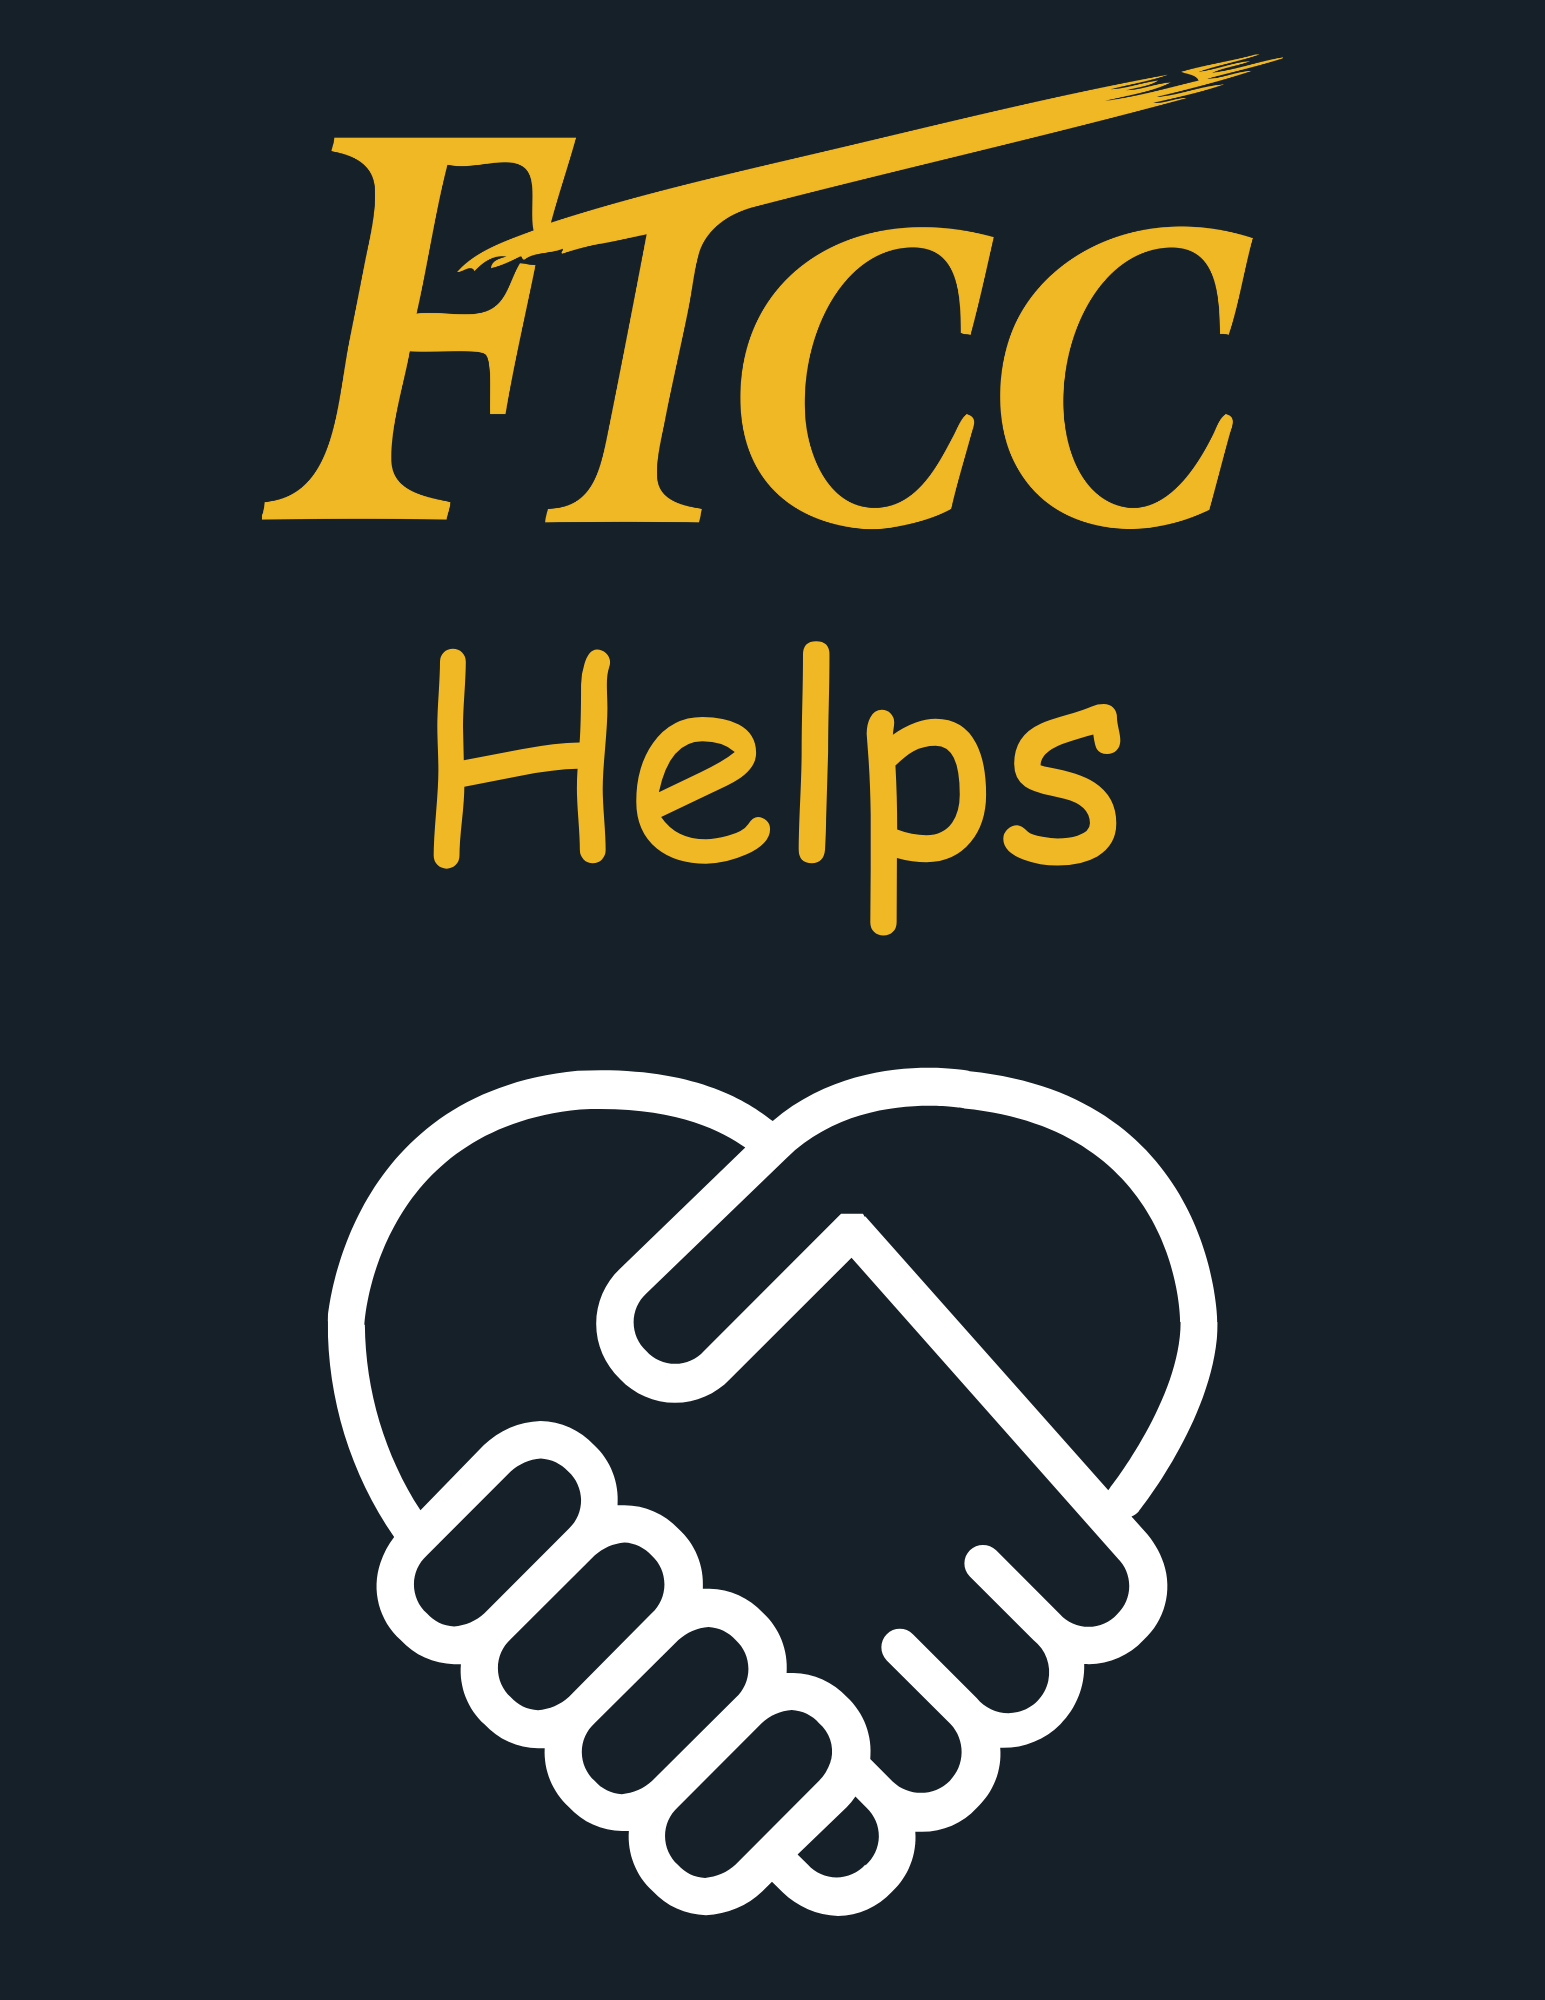 FTCC Helps logo